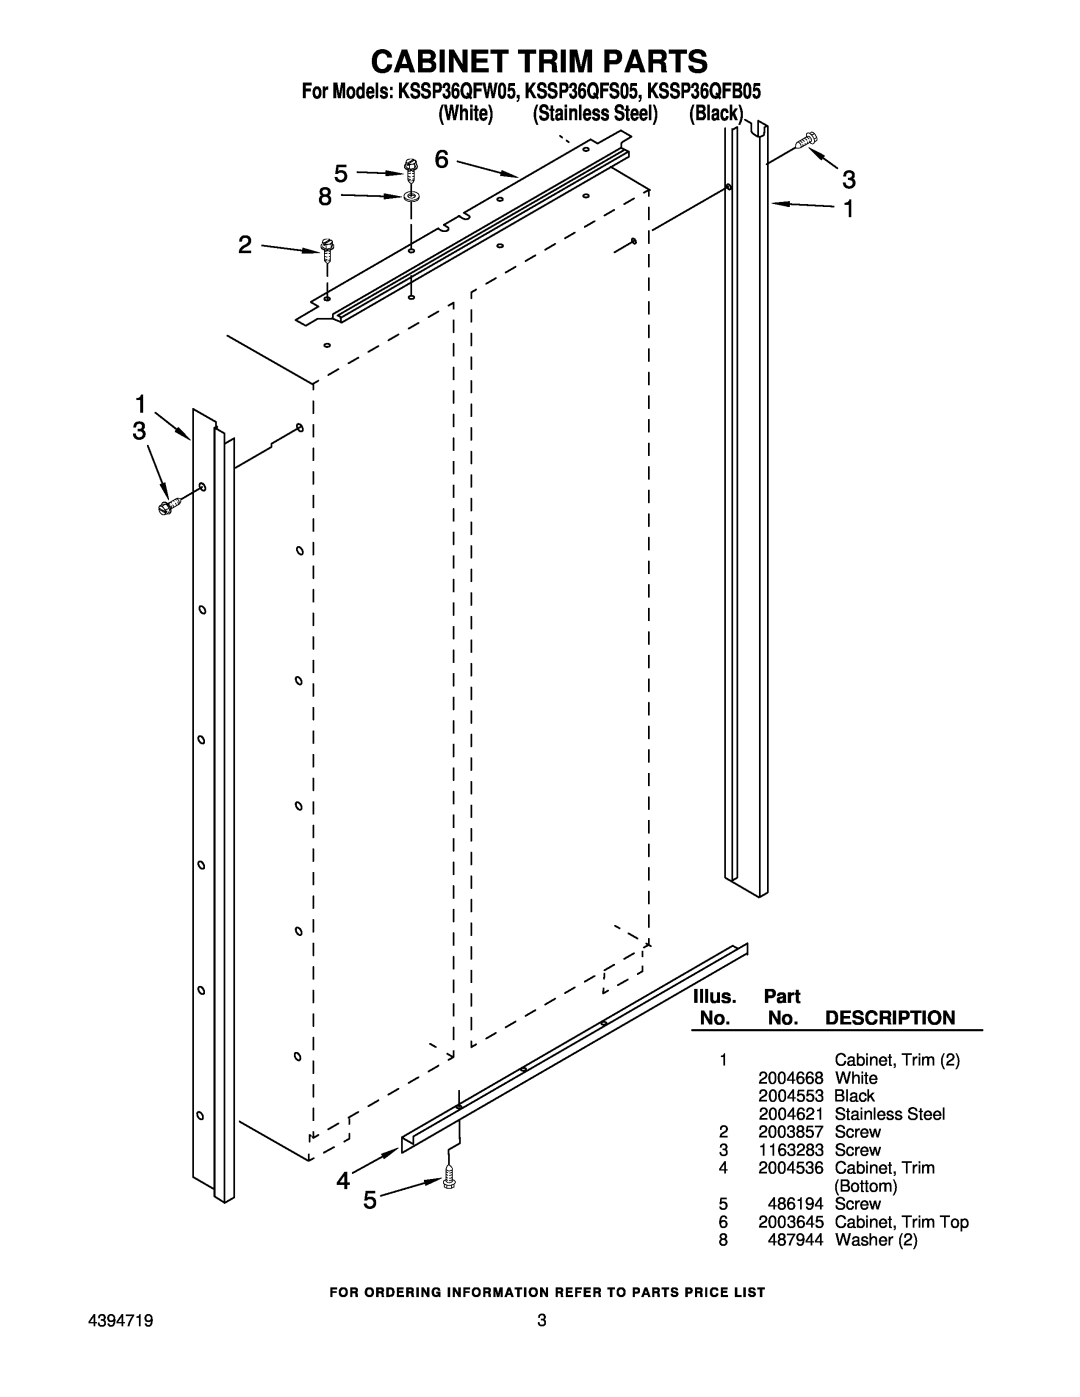 KitchenAid manual Cabinet Trim Parts, Description, For Models KSSP36QFW05, KSSP36QFS05, KSSP36QFB05, Illus 